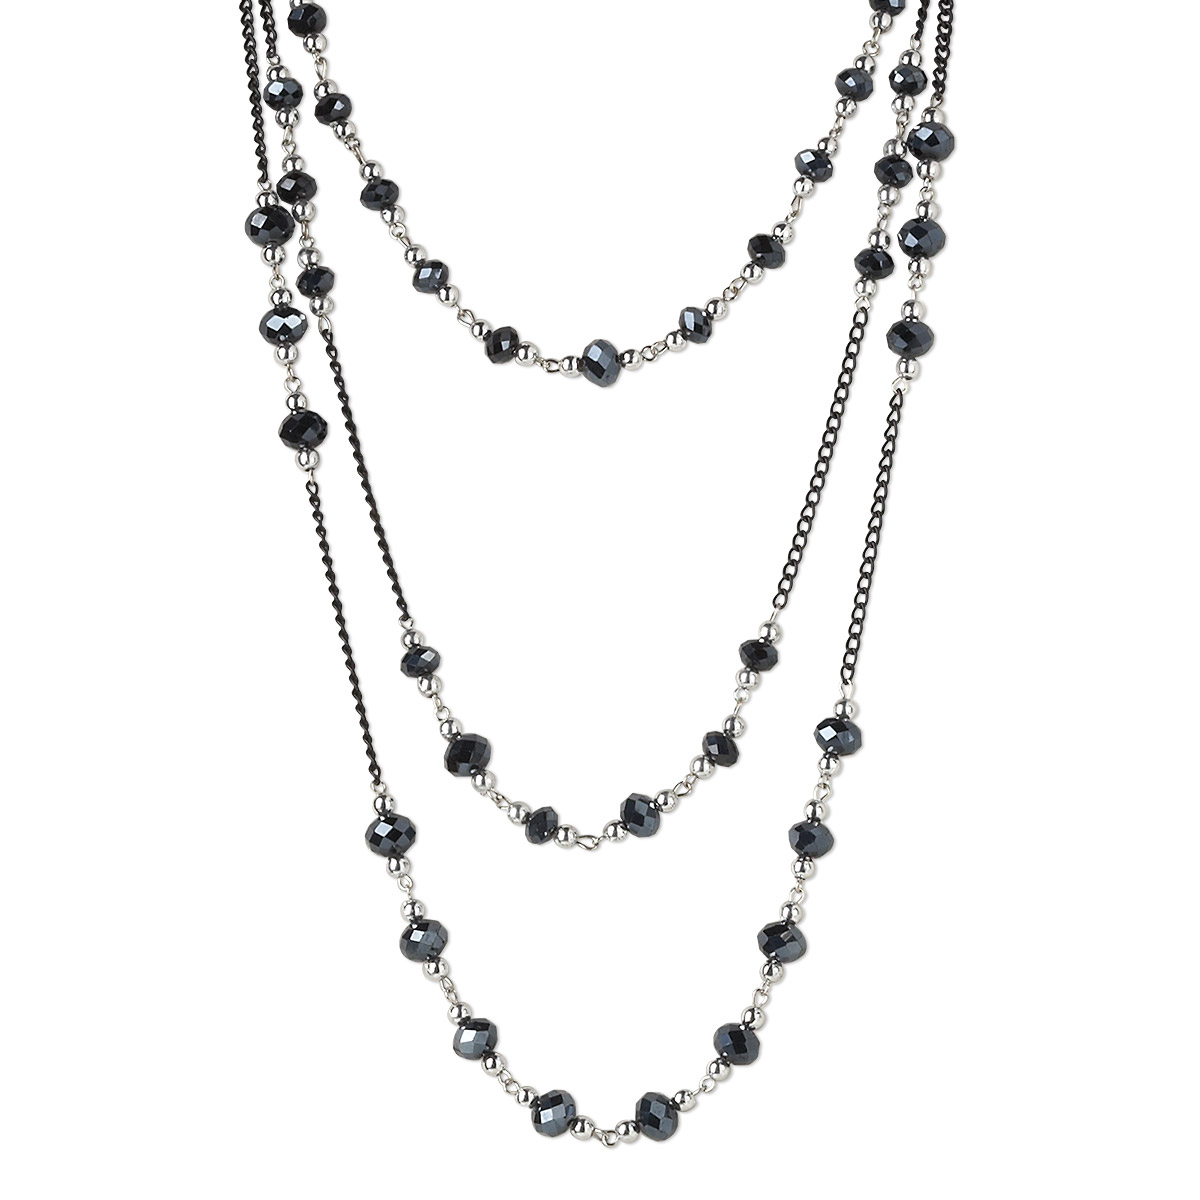 Necklace, 3-strand, steel / glass / silver-colored plastic, metallic ...